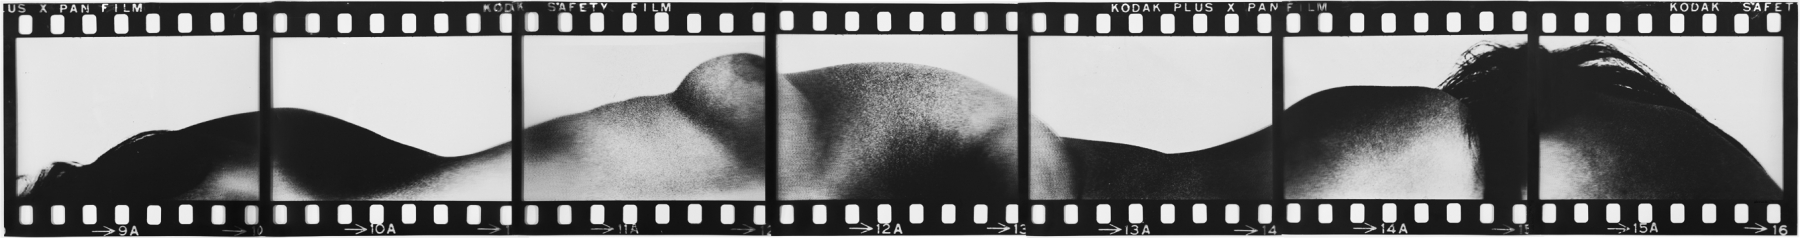 Kodak Safety Film/Figure Horizon, 1971, 7 Unique pieces of Lithographic Film